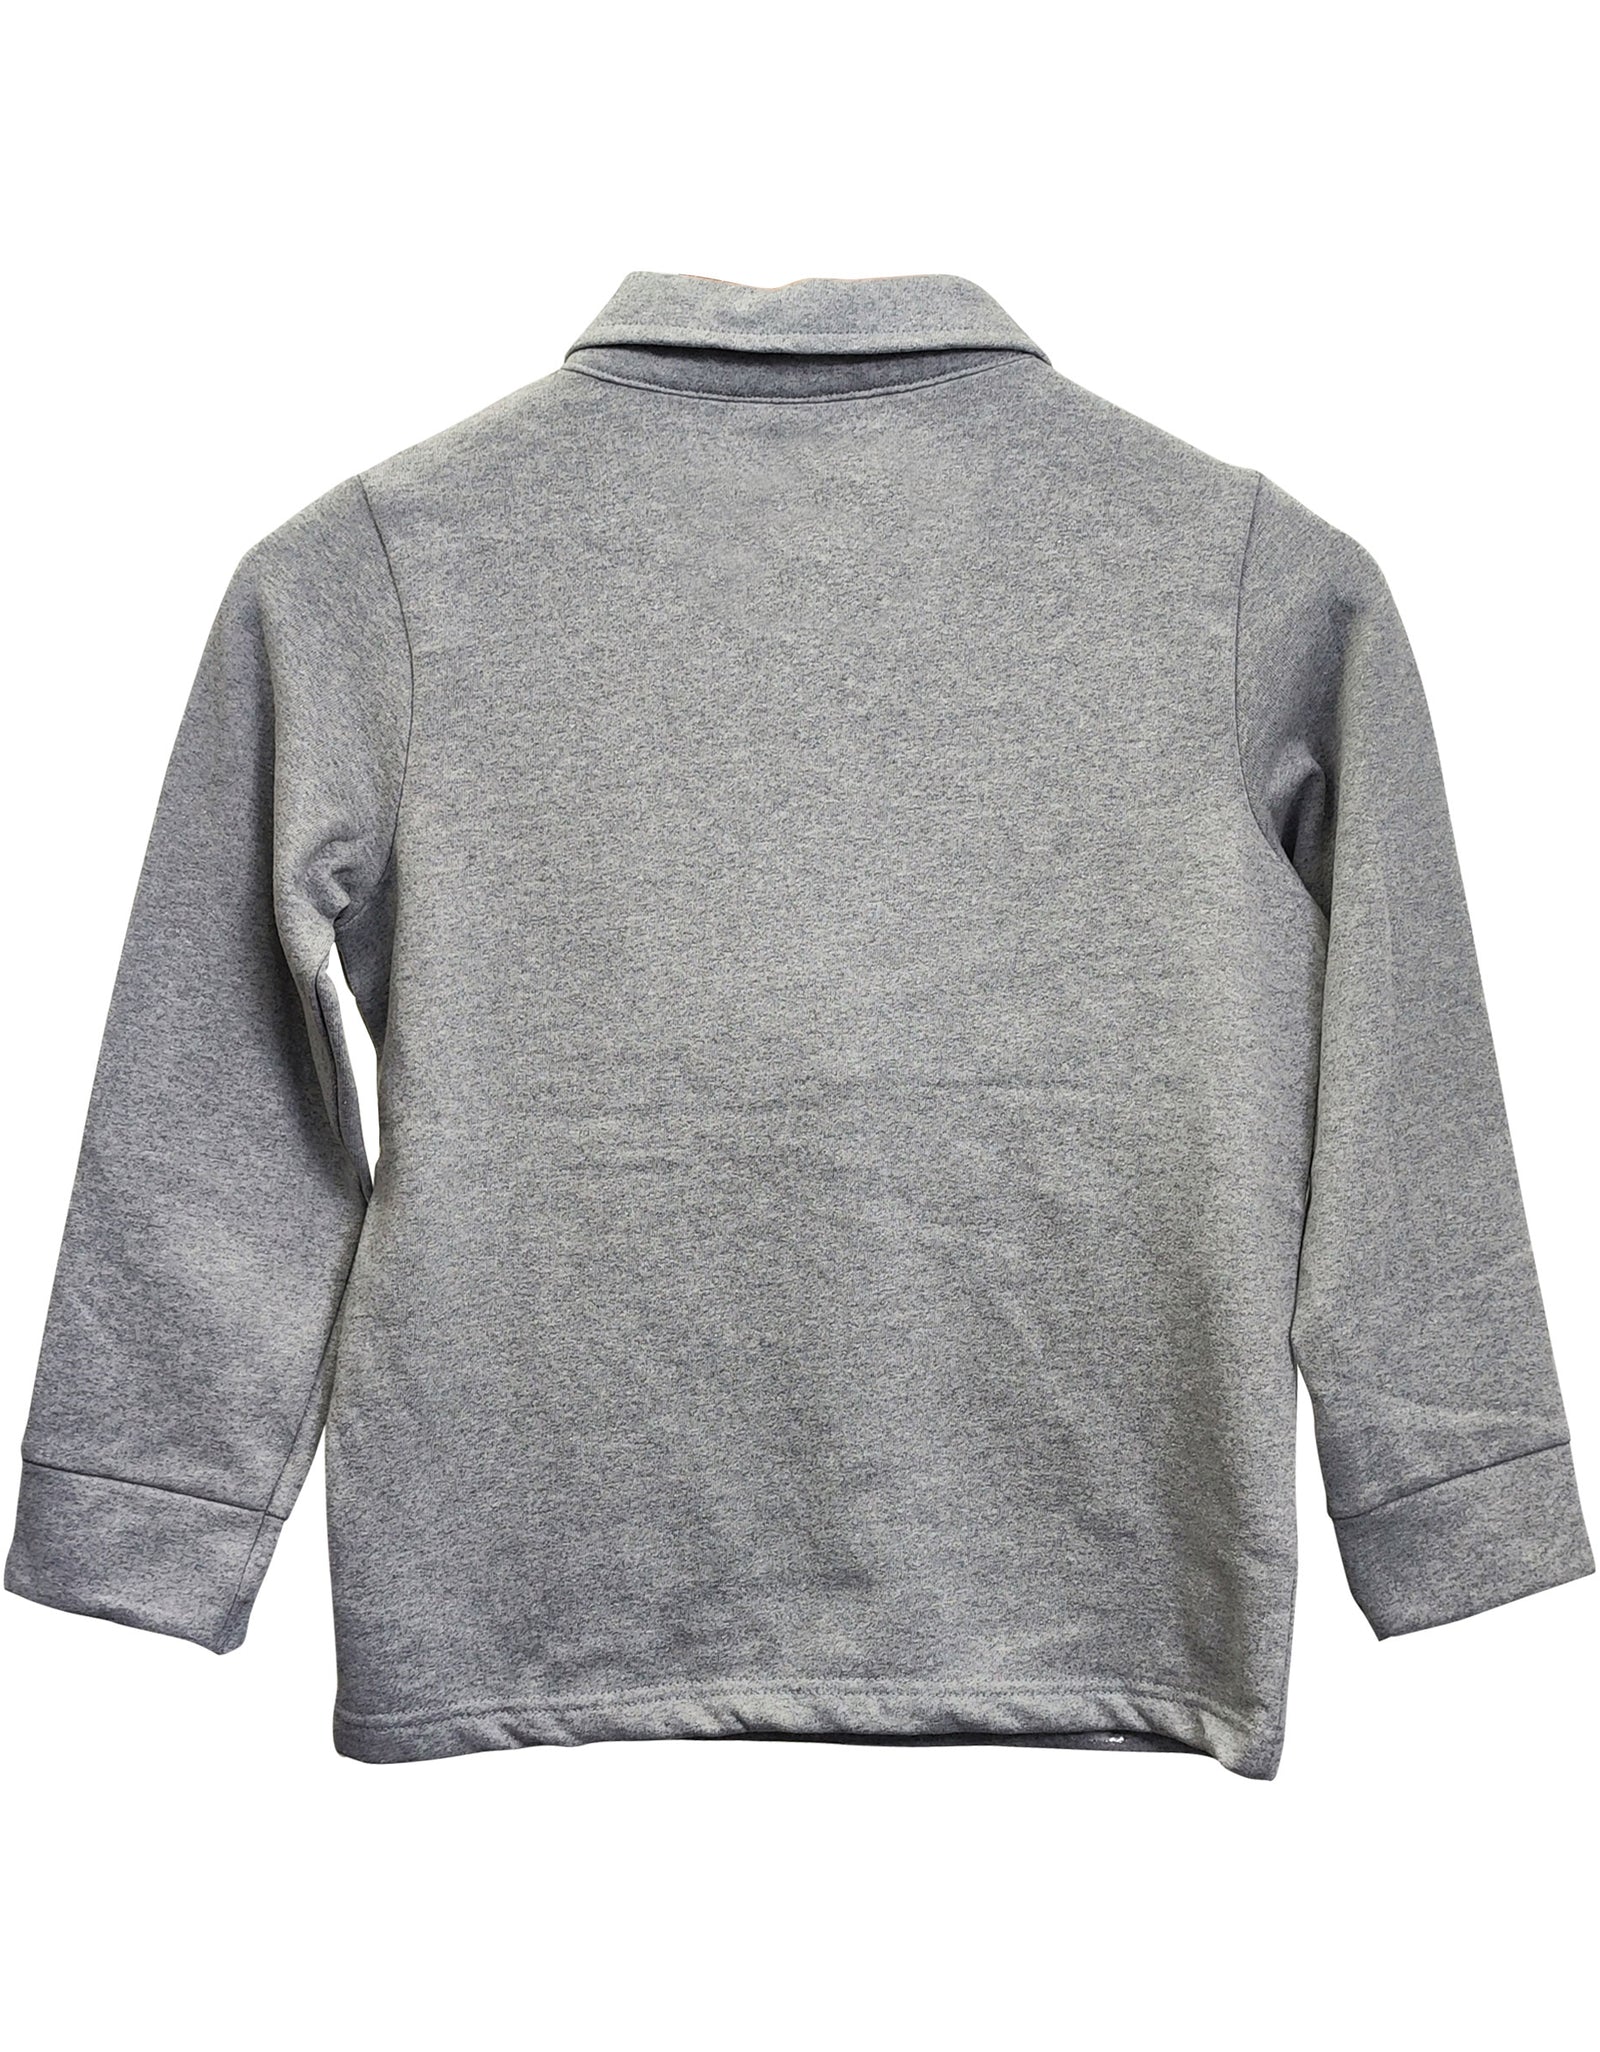 Sweatshirt for Kids  - Grey Melange